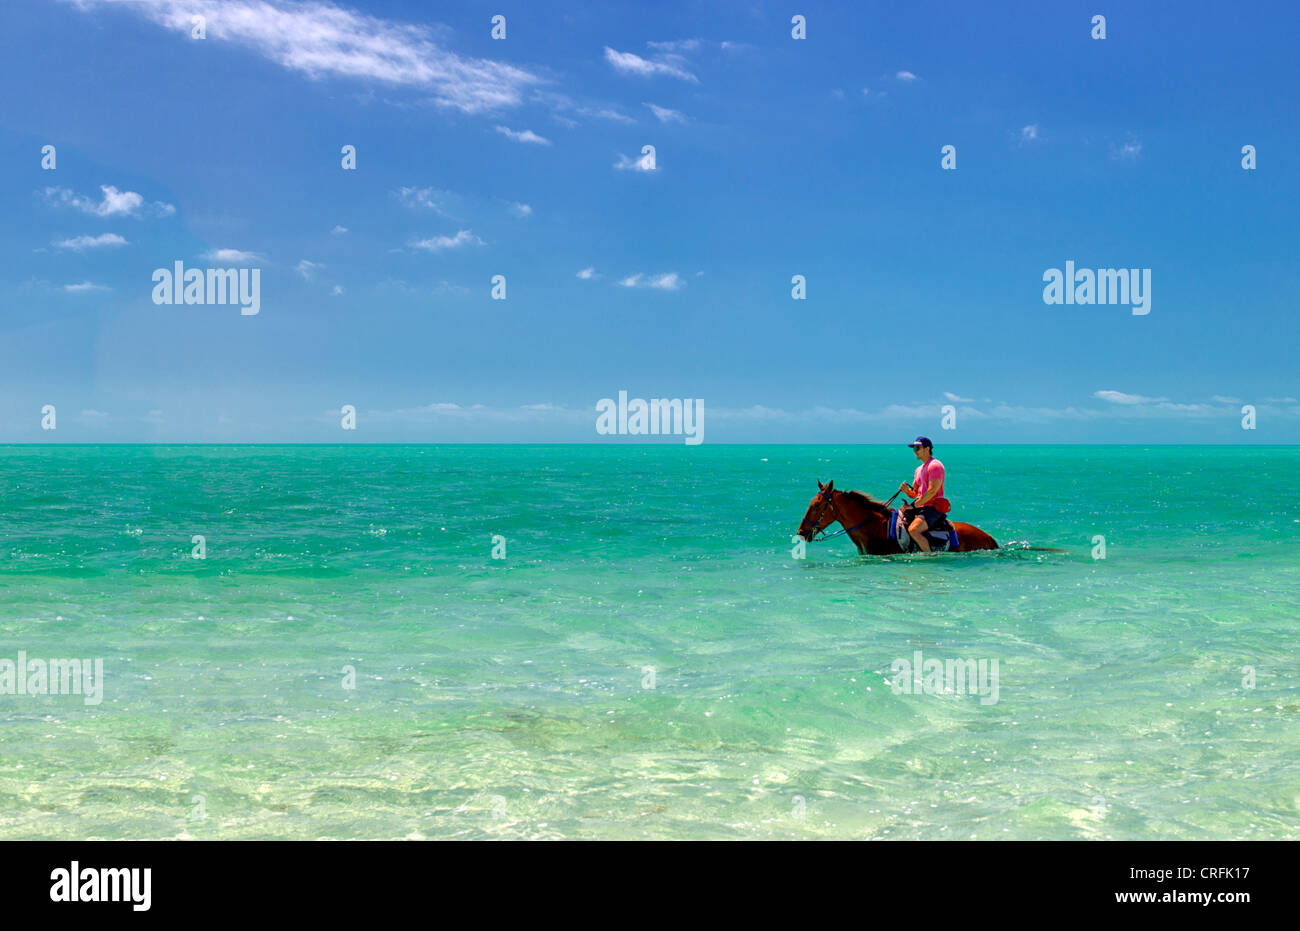 Horse rider dans l'eau. Providenciales. Îles Turques et Caïques. Banque D'Images